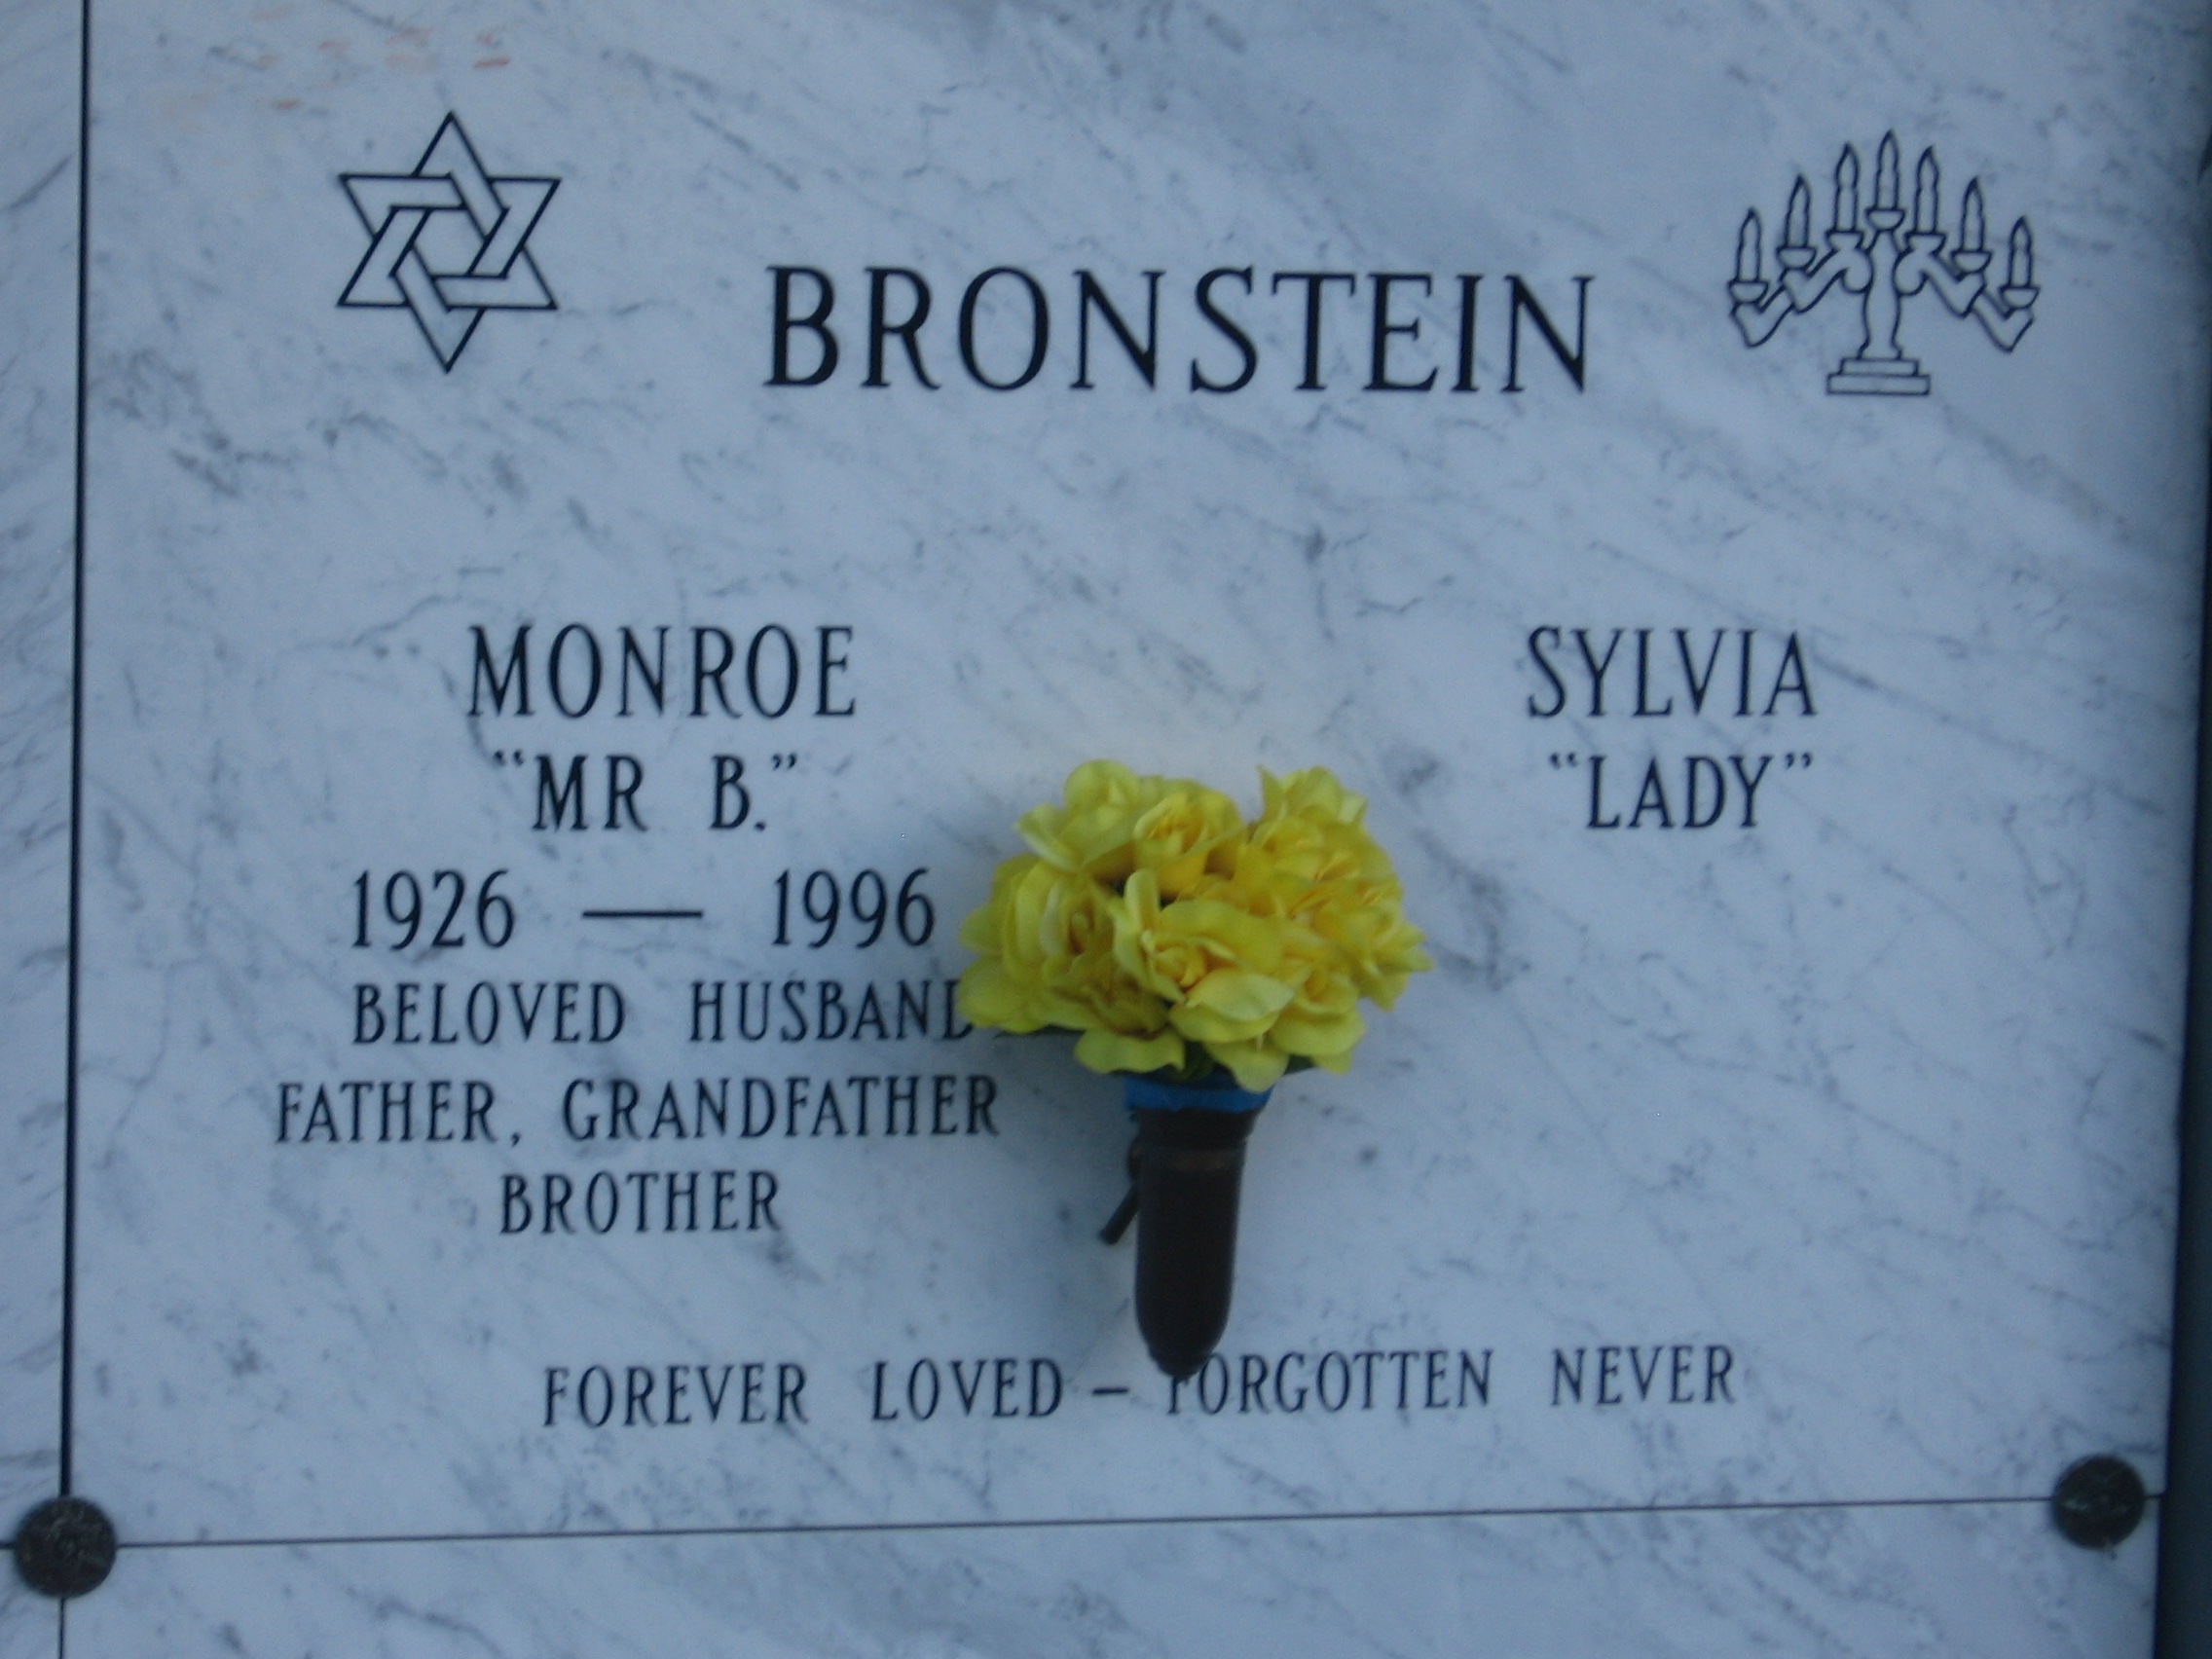 Monroe "Mr B" Bronstein